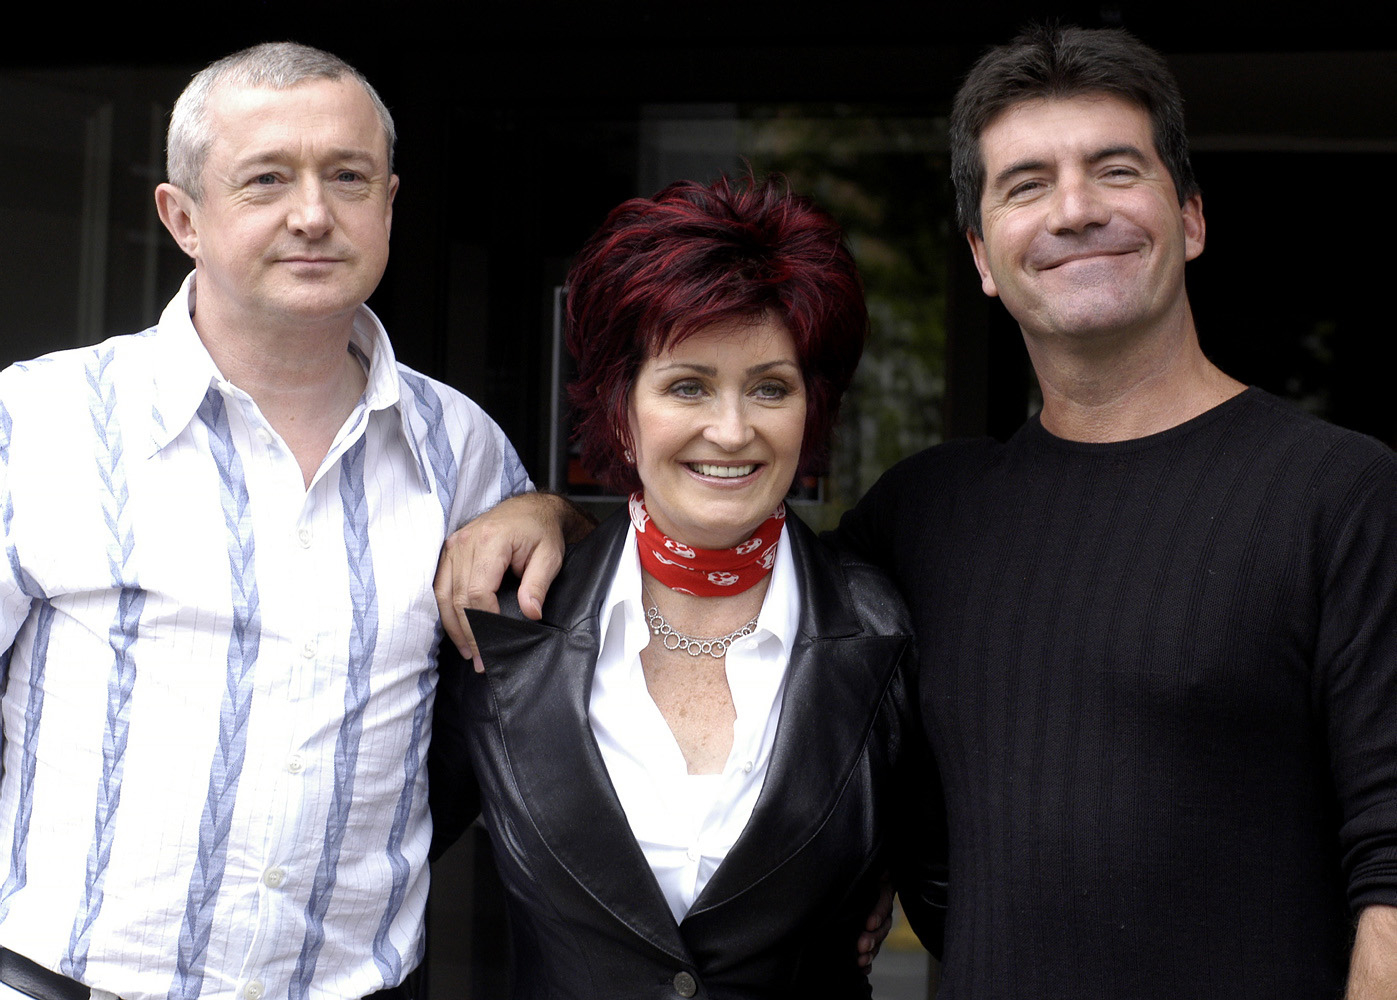 Louis Walsh, Sharon Osbourne and Simon Cowell